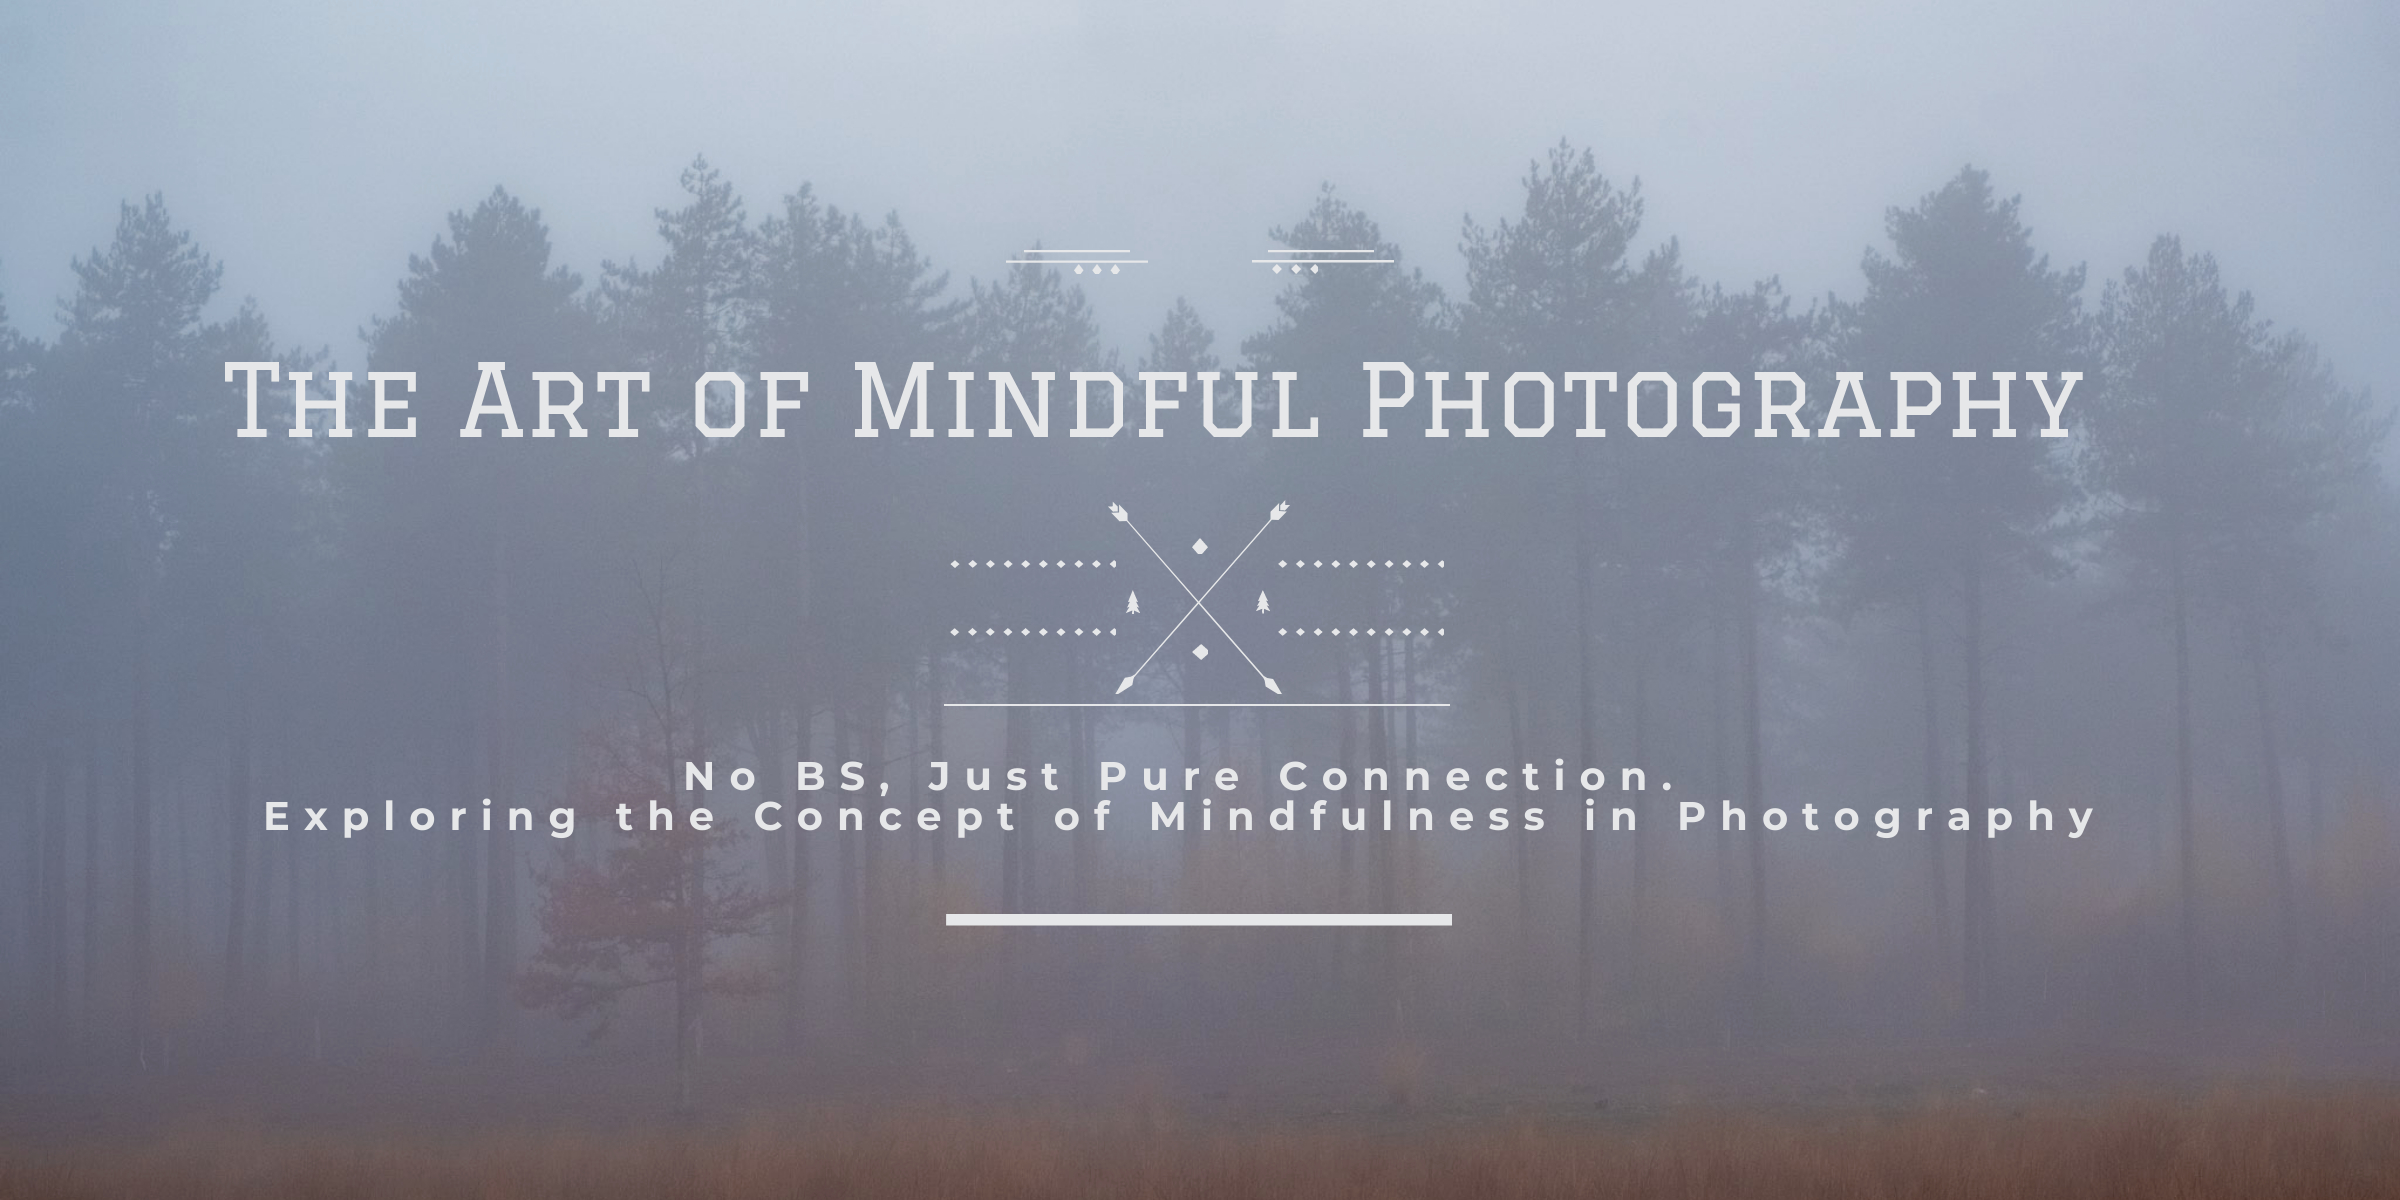 Keywords: Mindful Photography